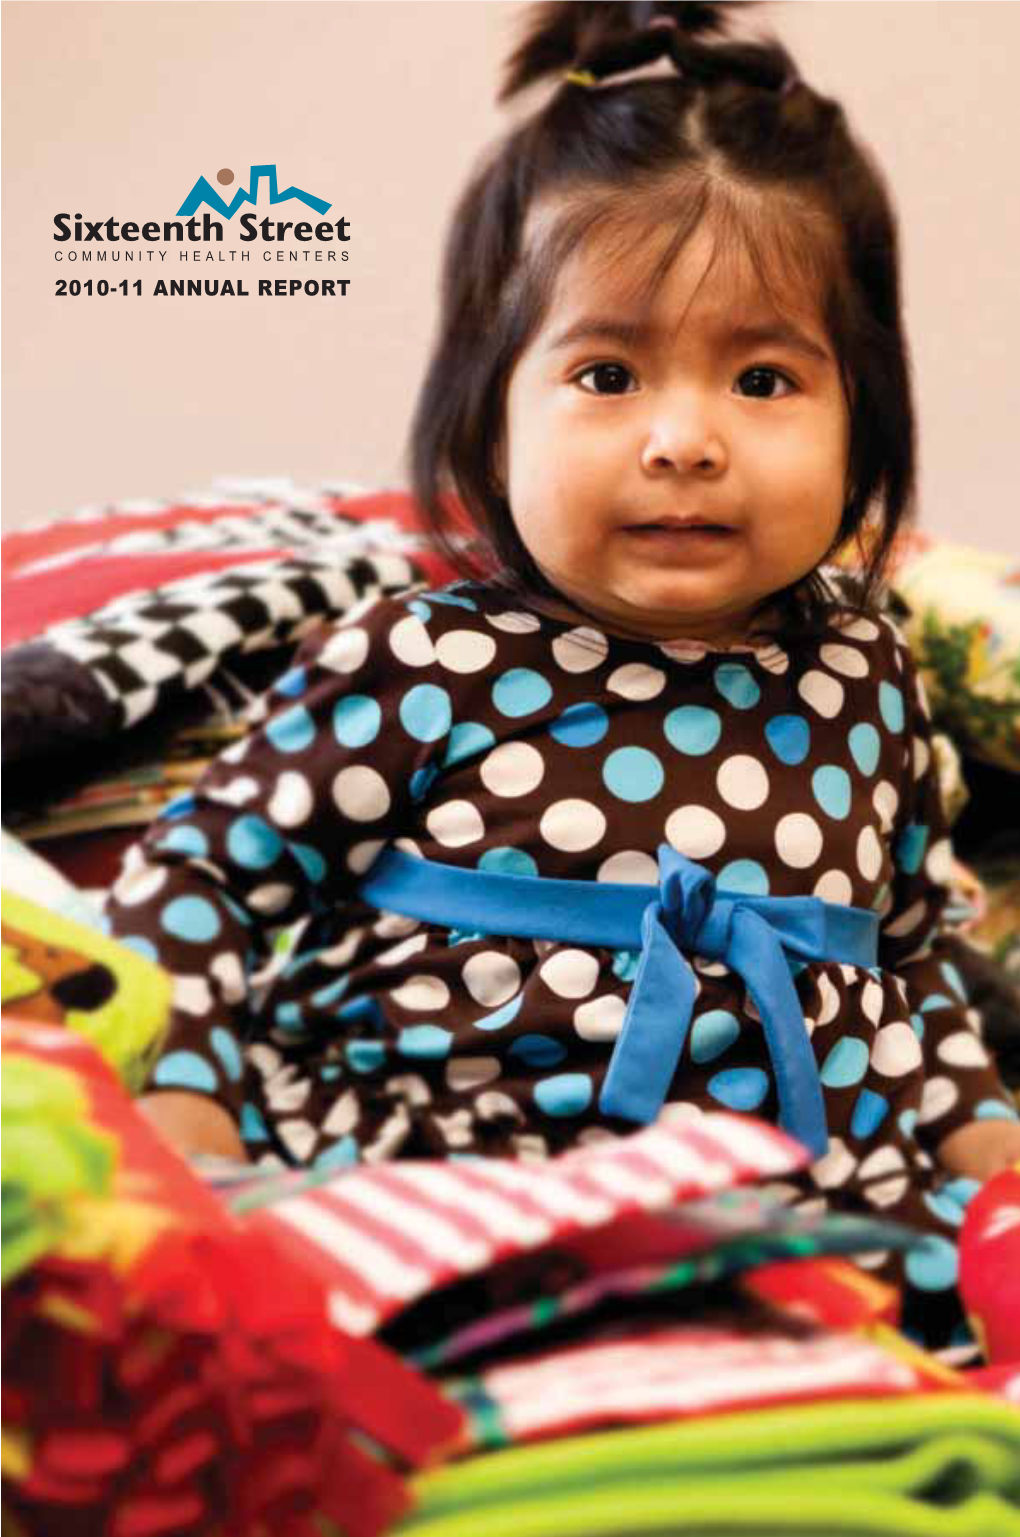 2010-11 Annual Report Mission Statement